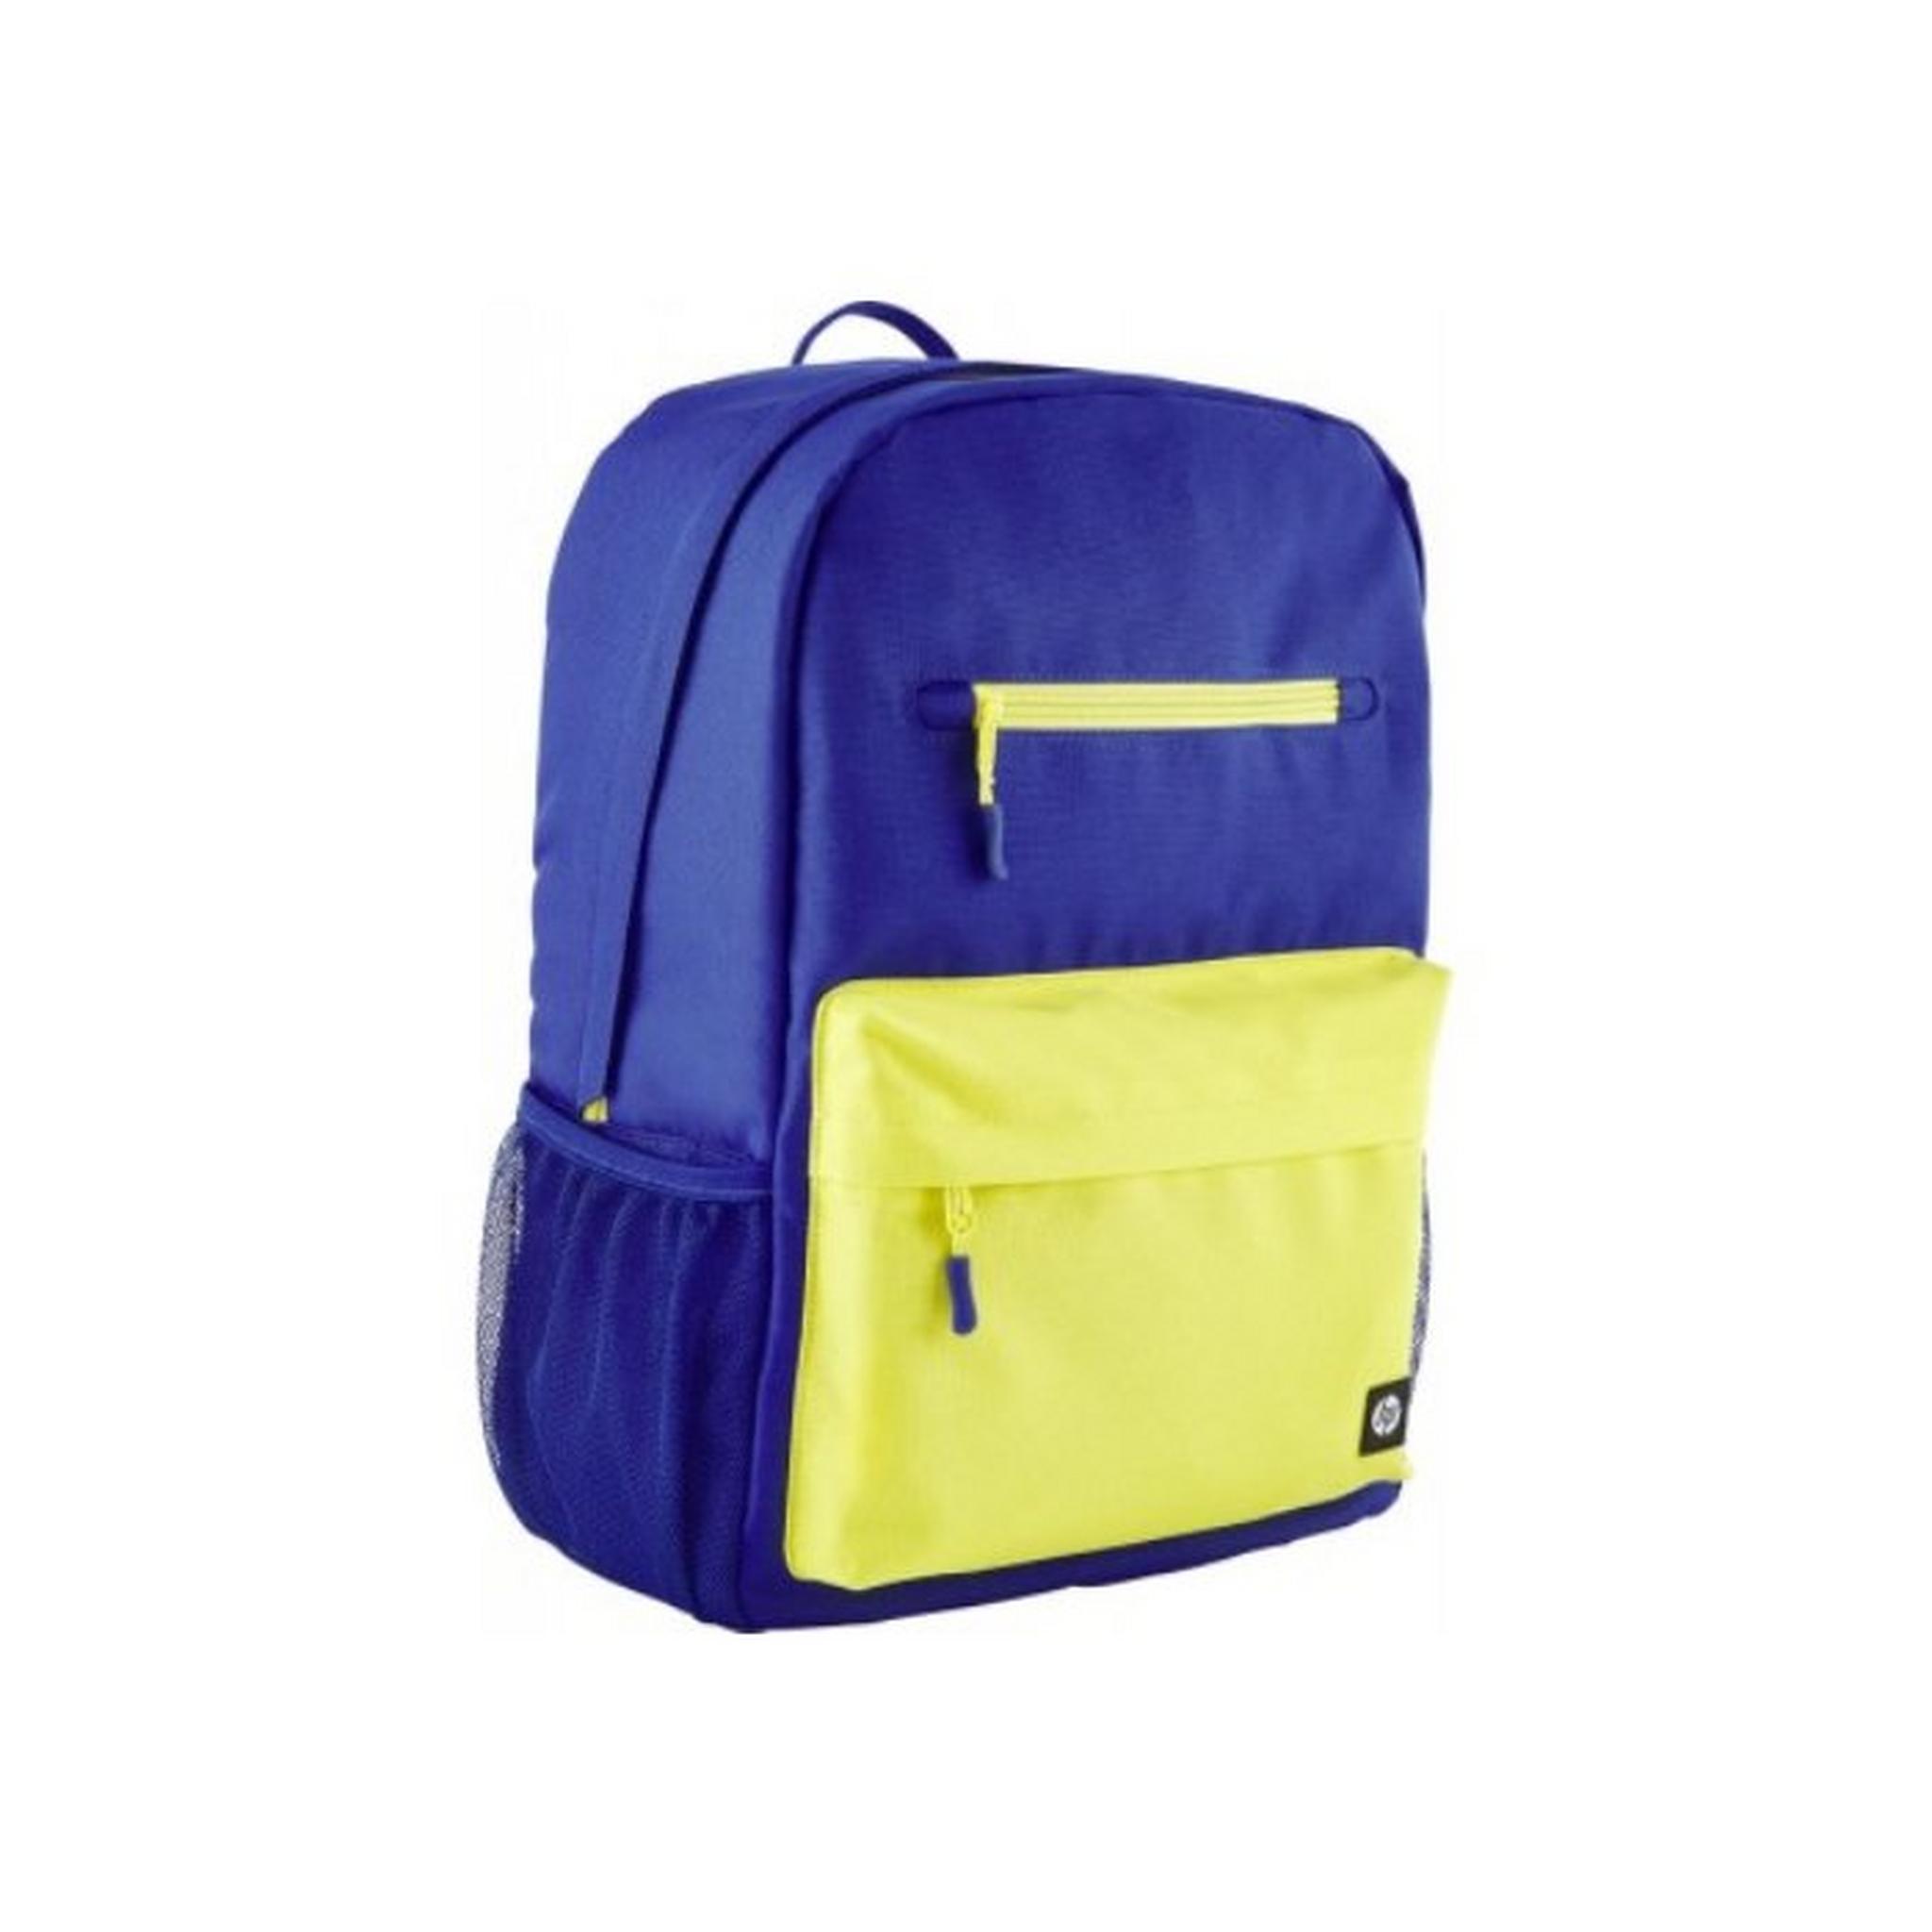 HEWLETT PACKARD Campus 15.6 inch Laptop Backpack, , 7J596AA – Blue & Yellow